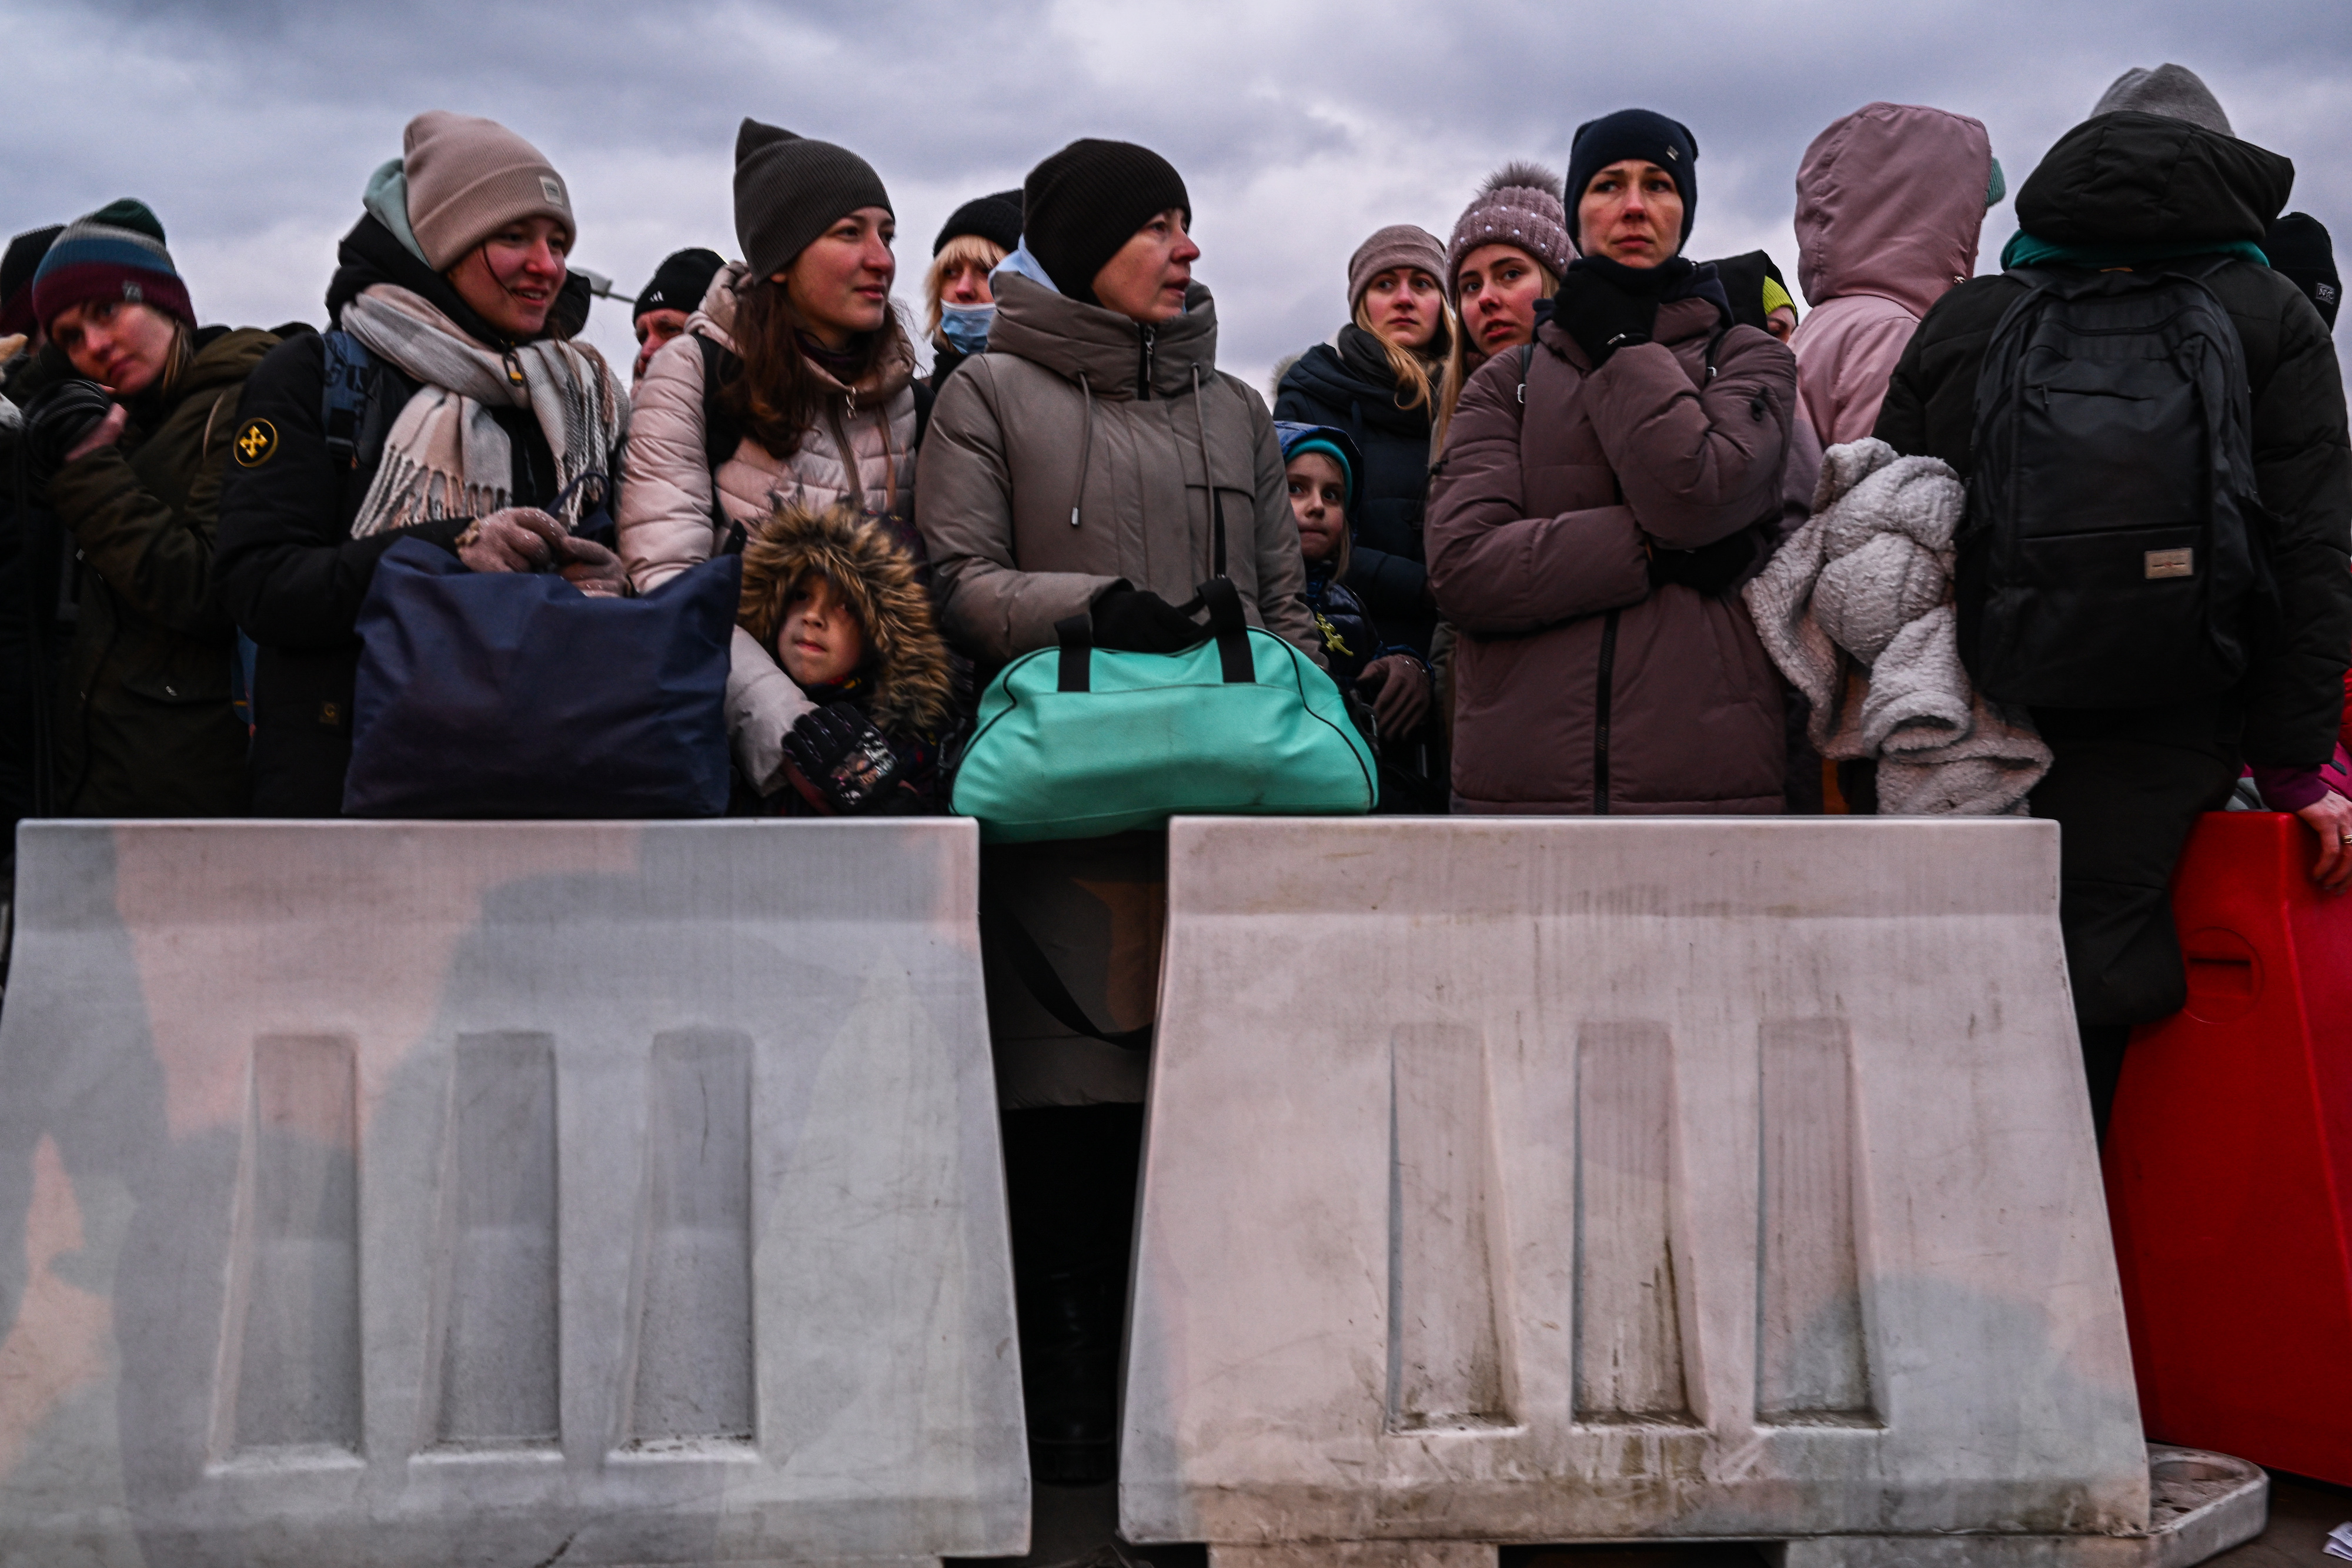 More than 1 million Ukrainians arrive in Poland seeking evacuation from Russian invasion